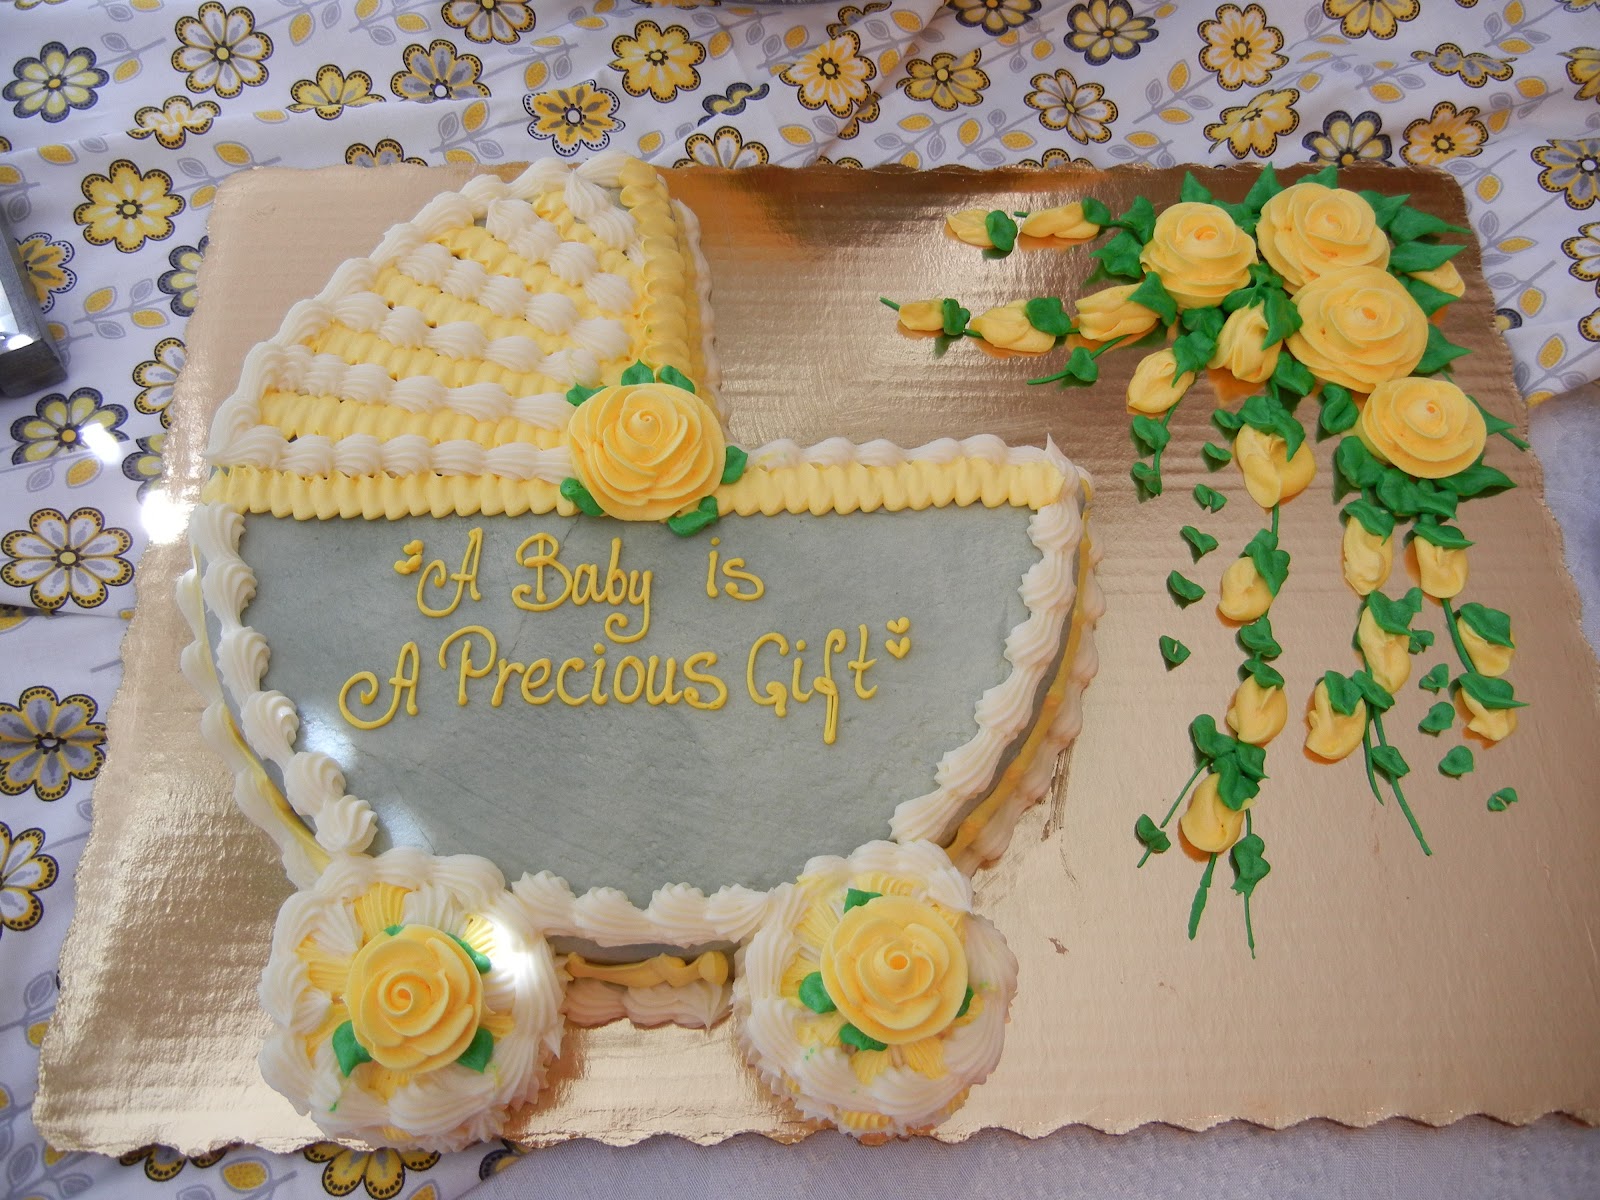 Baby Shower Cakes From Publix http://bradandmeredithcleveland.blogspot ...